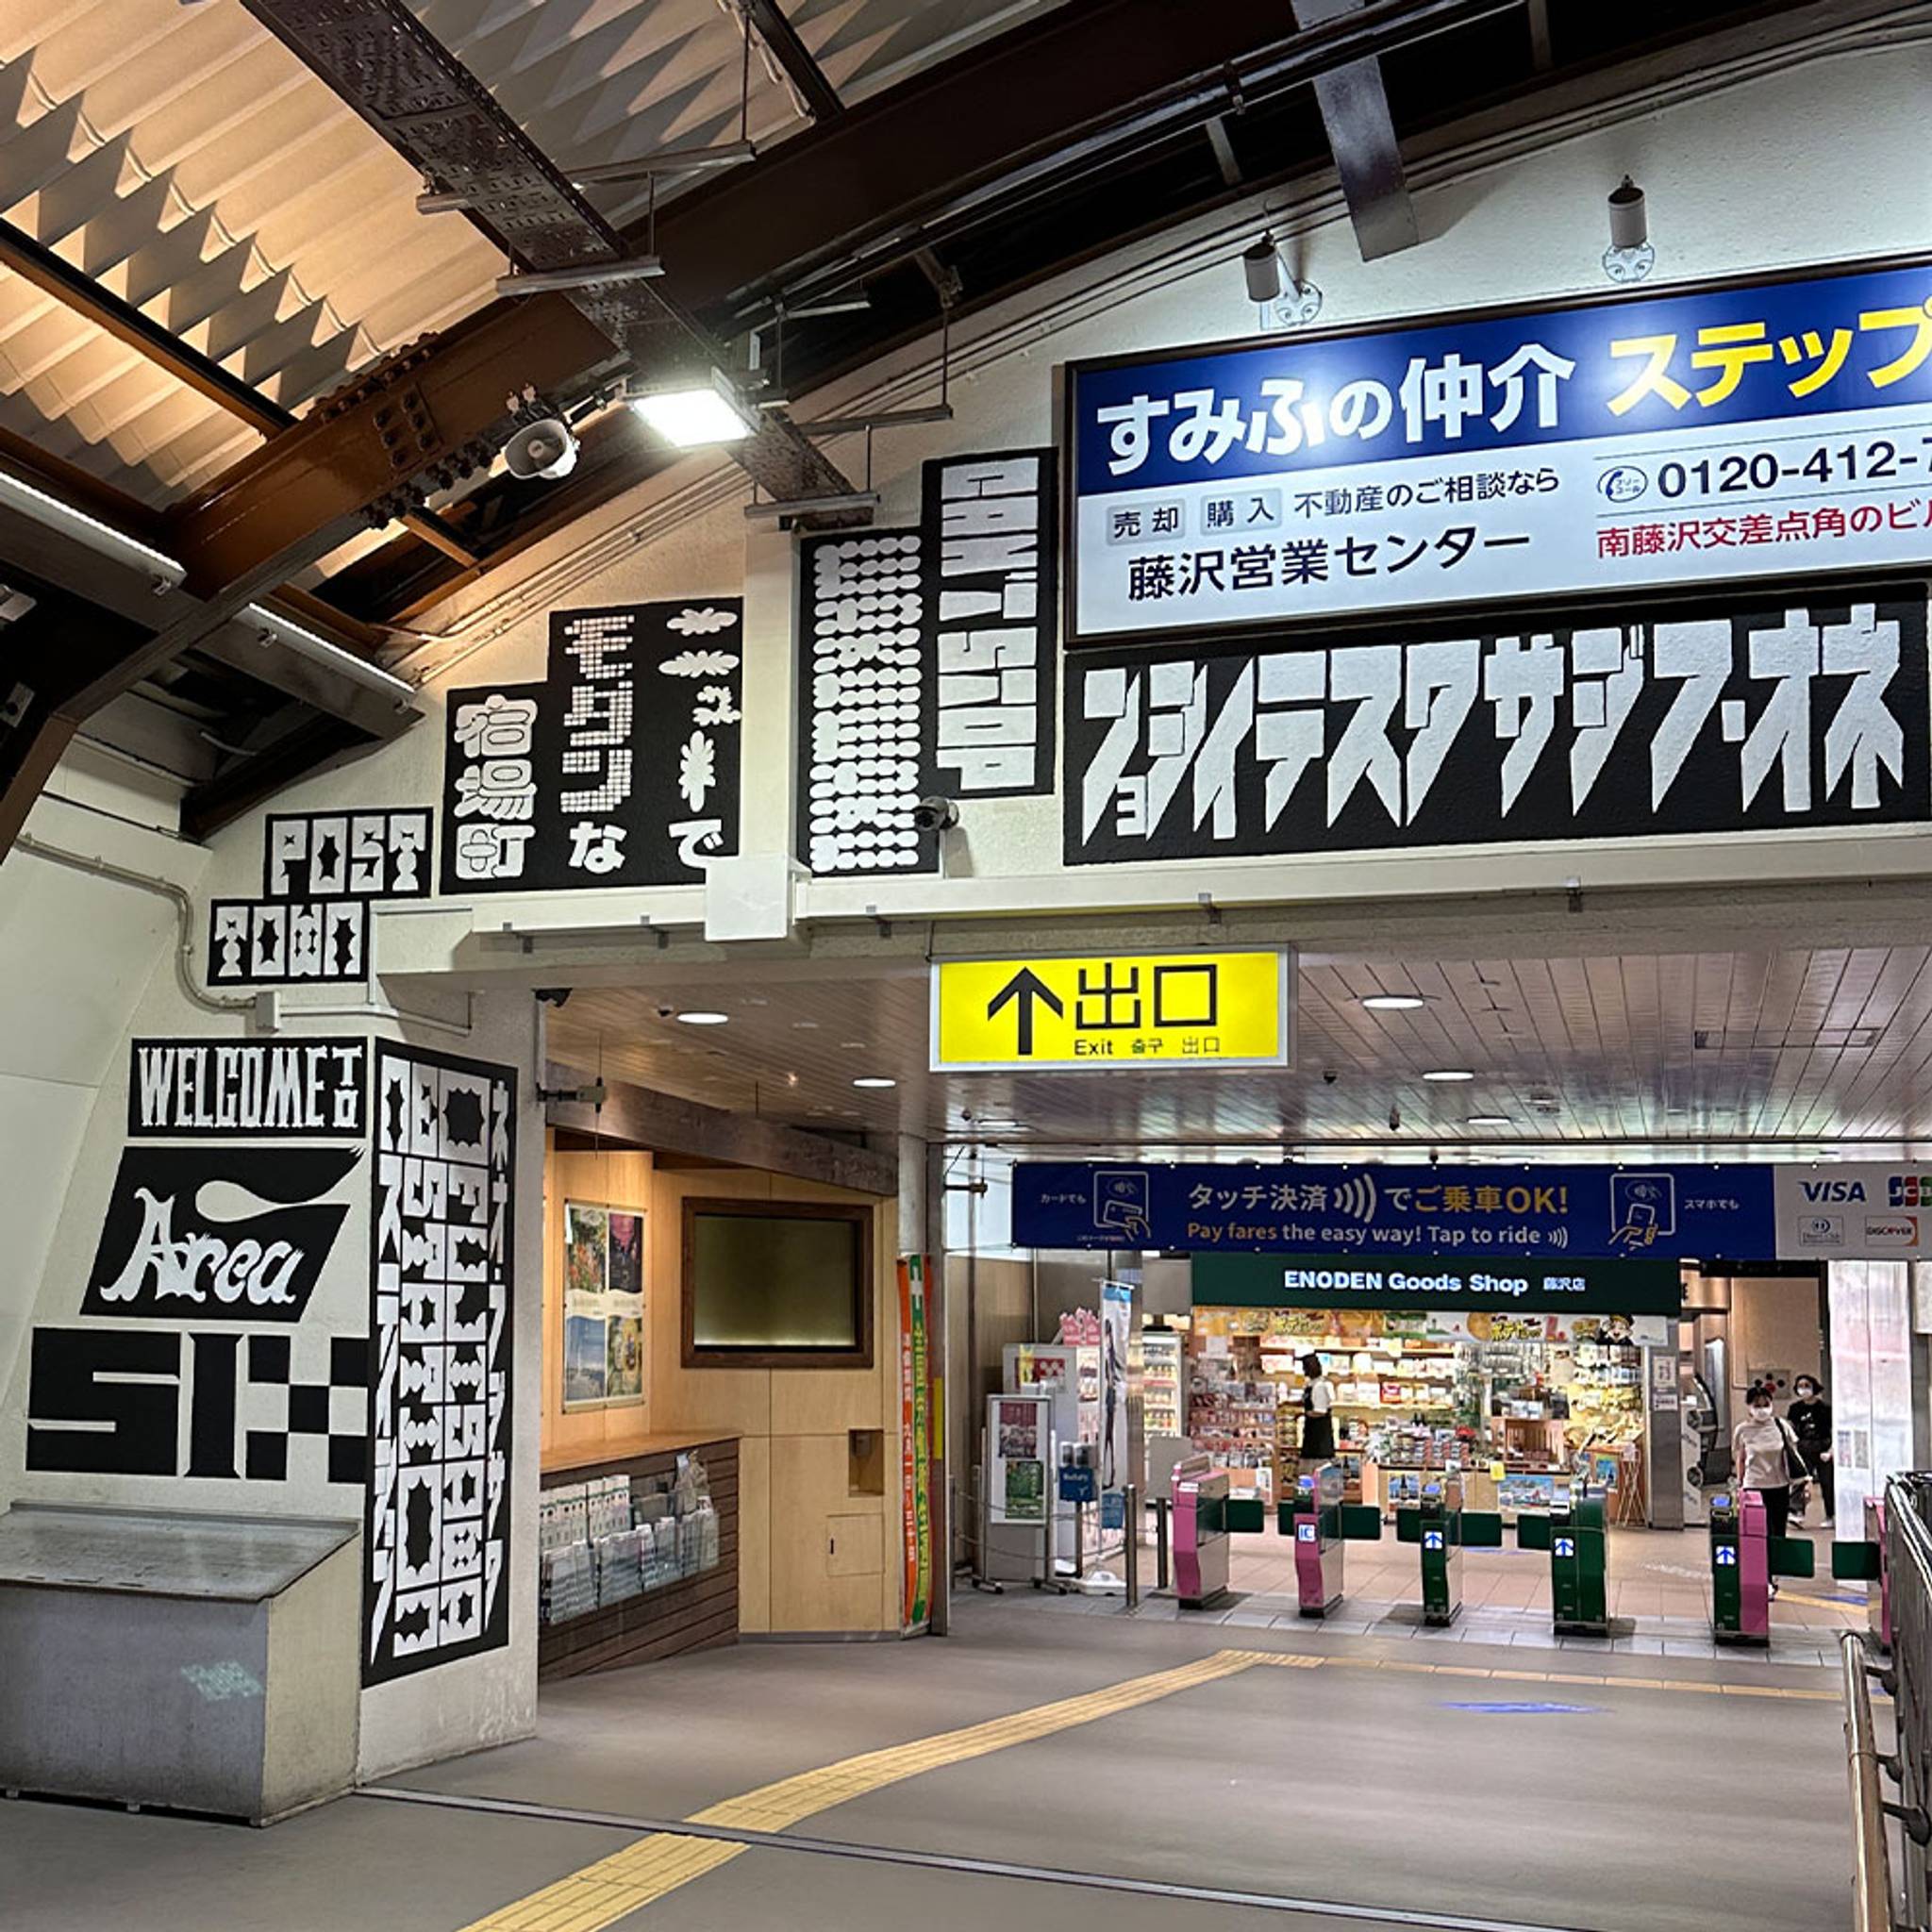 Eastside Transition&mdash;Fujisawa train station Enoden - 05